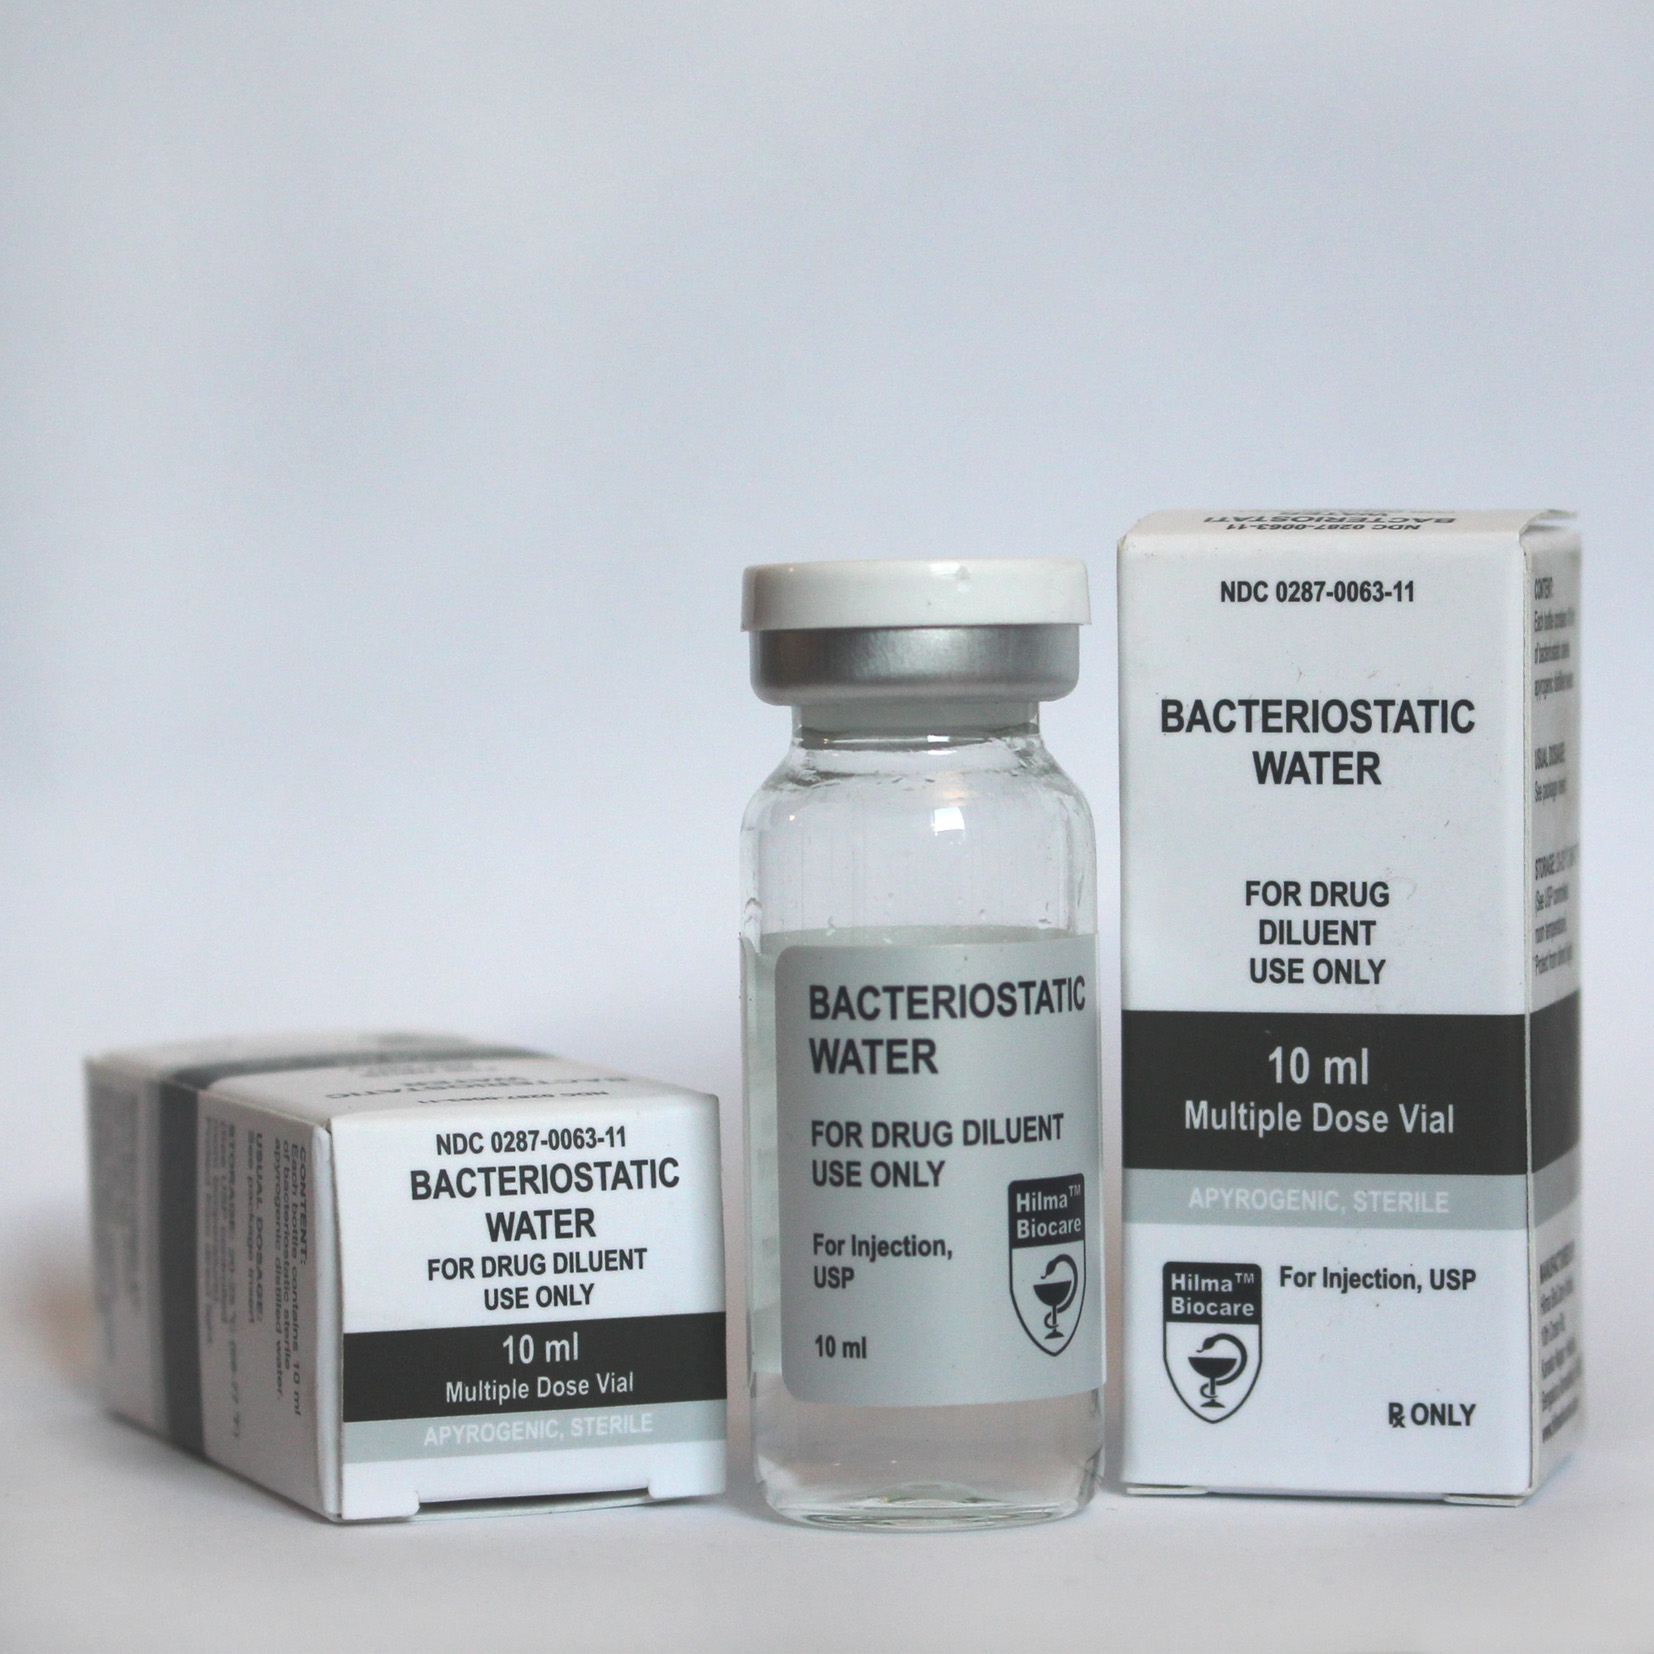 Hilma Biocare Bacteriostatisch Water 10ml (Bac. water)